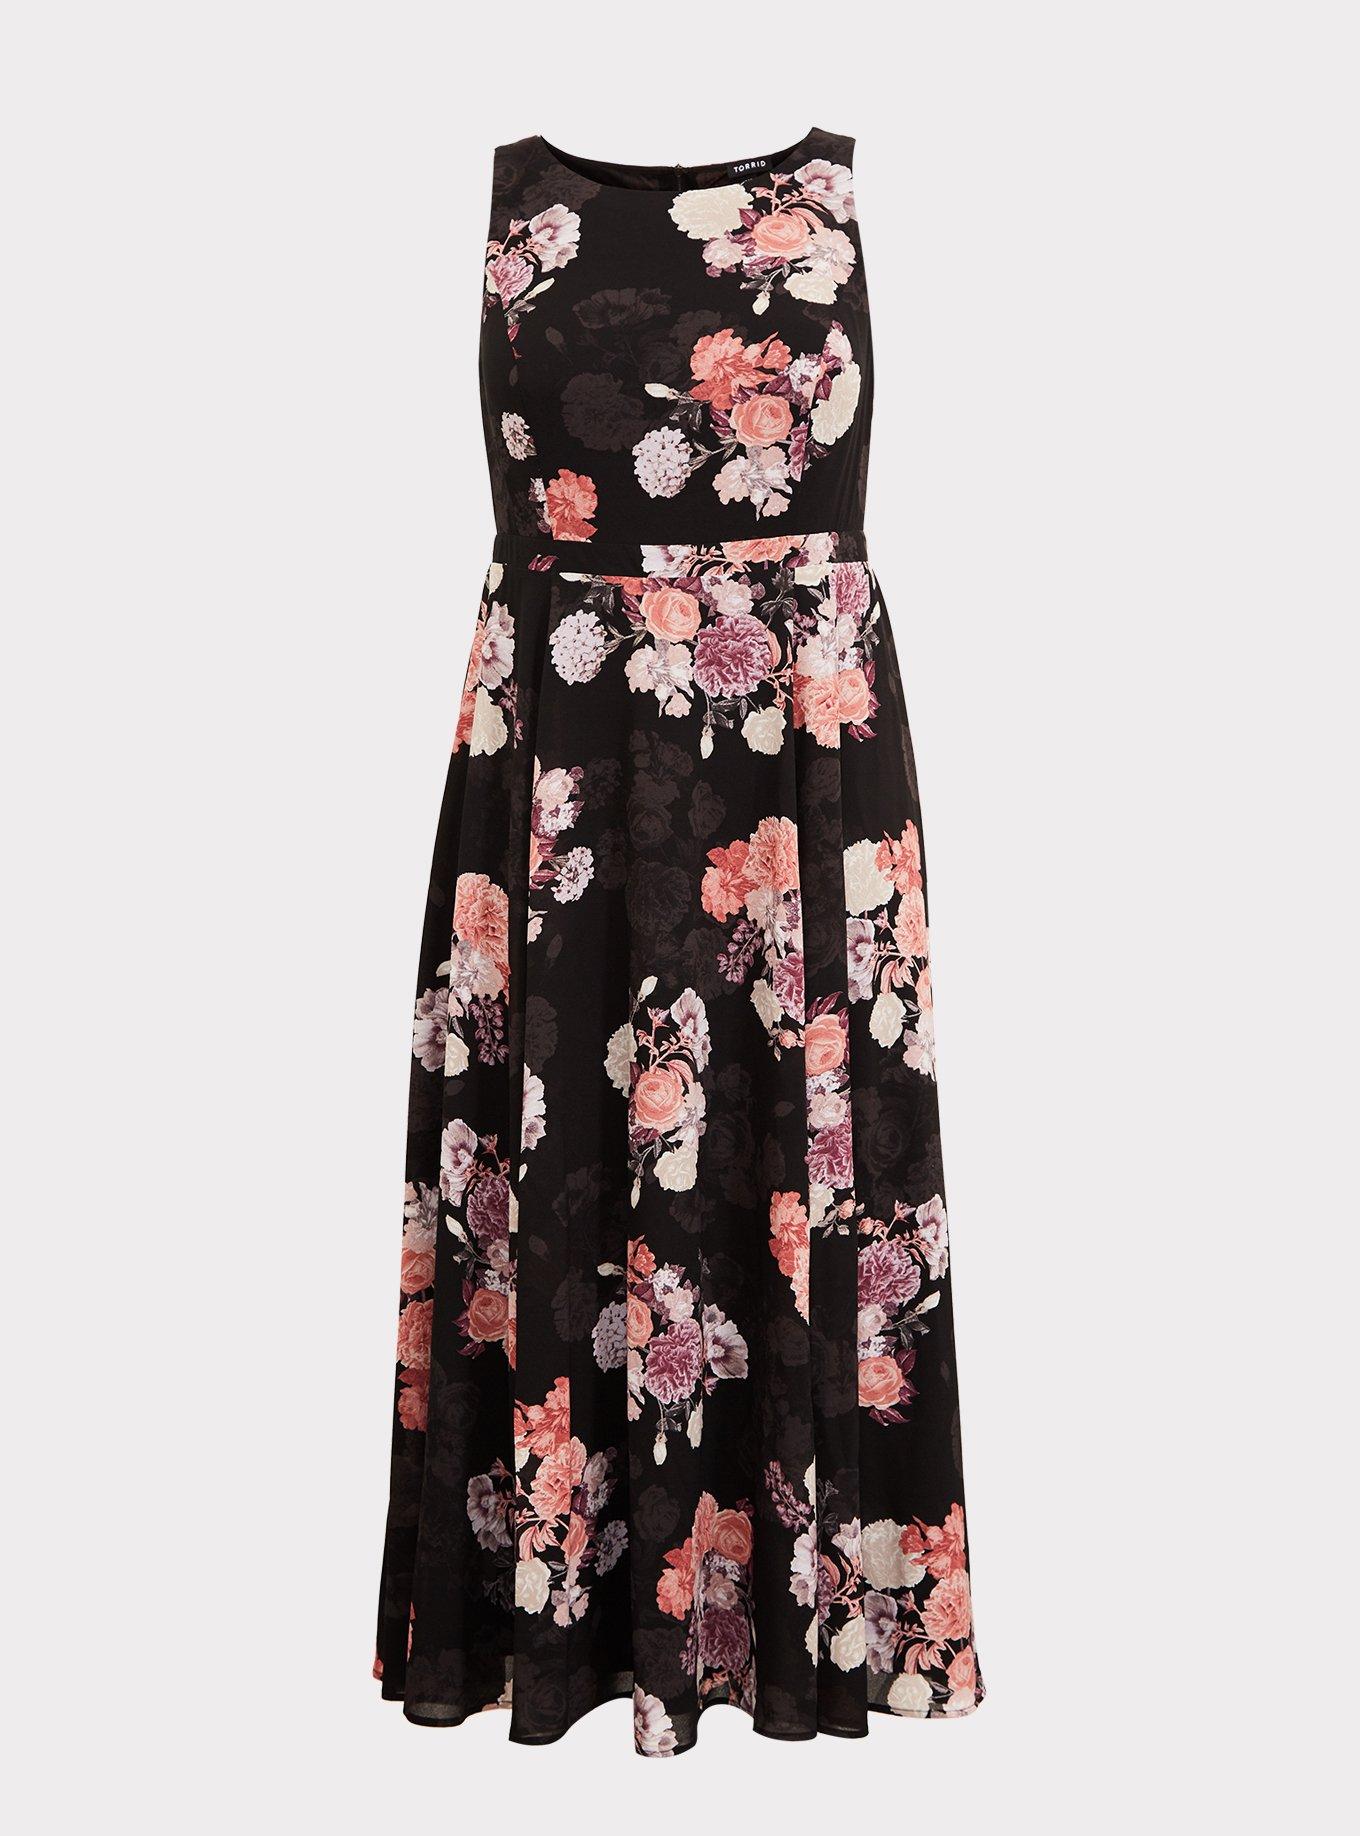 Torrid Georgette Black Floral Maxi Dress size 2X